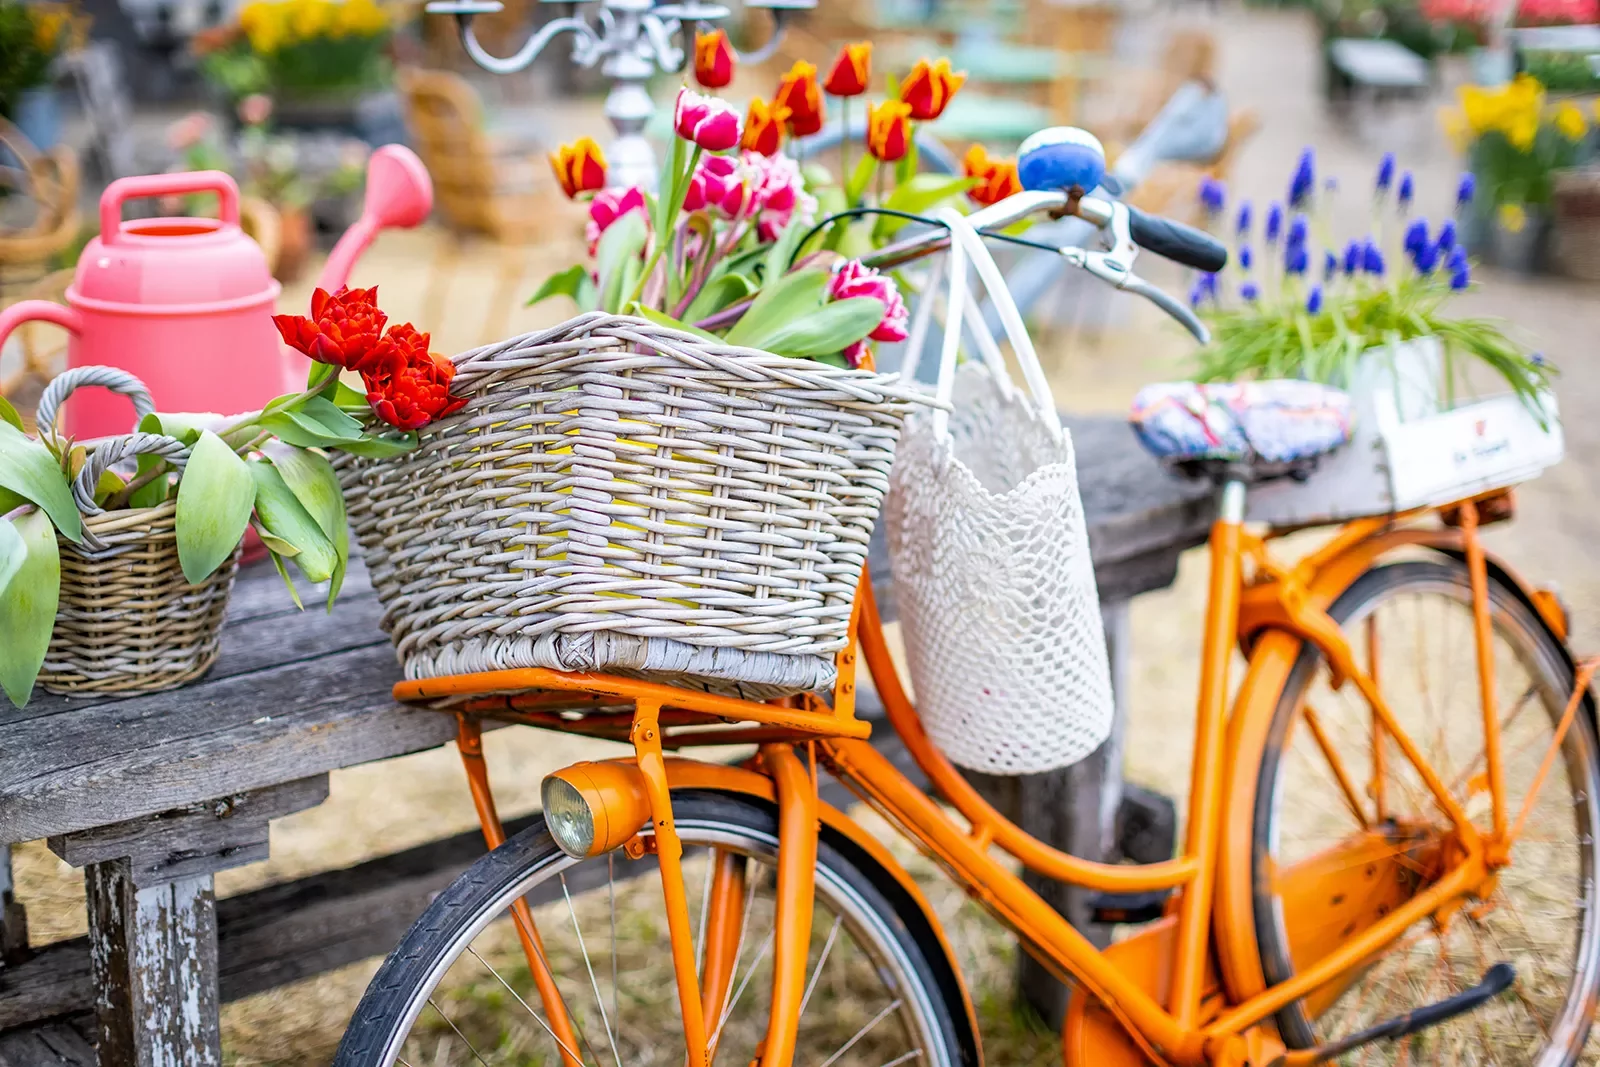 Close-up of orange bike w/ basket, flowers, bench, etc.